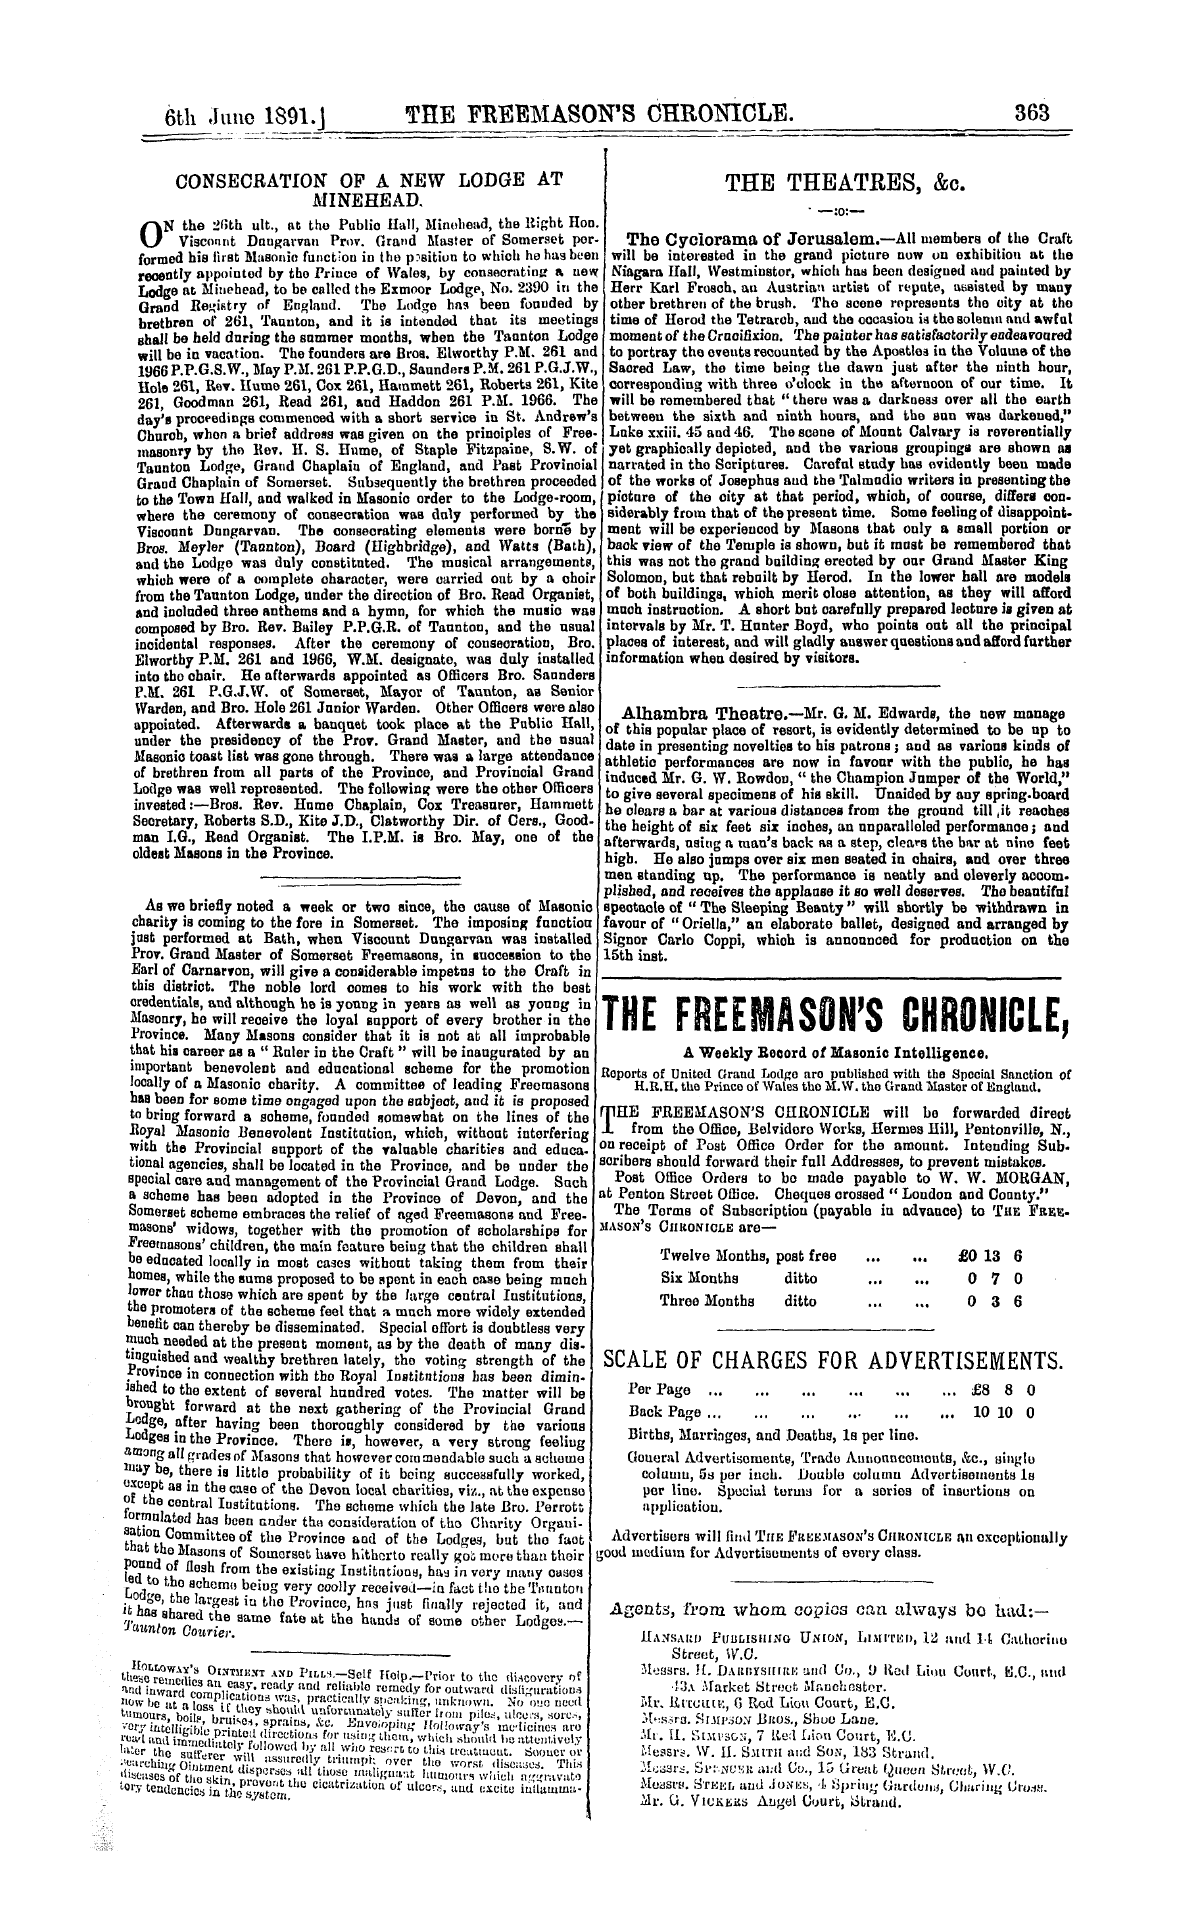 The Freemason's Chronicle: 1891-06-06: 11